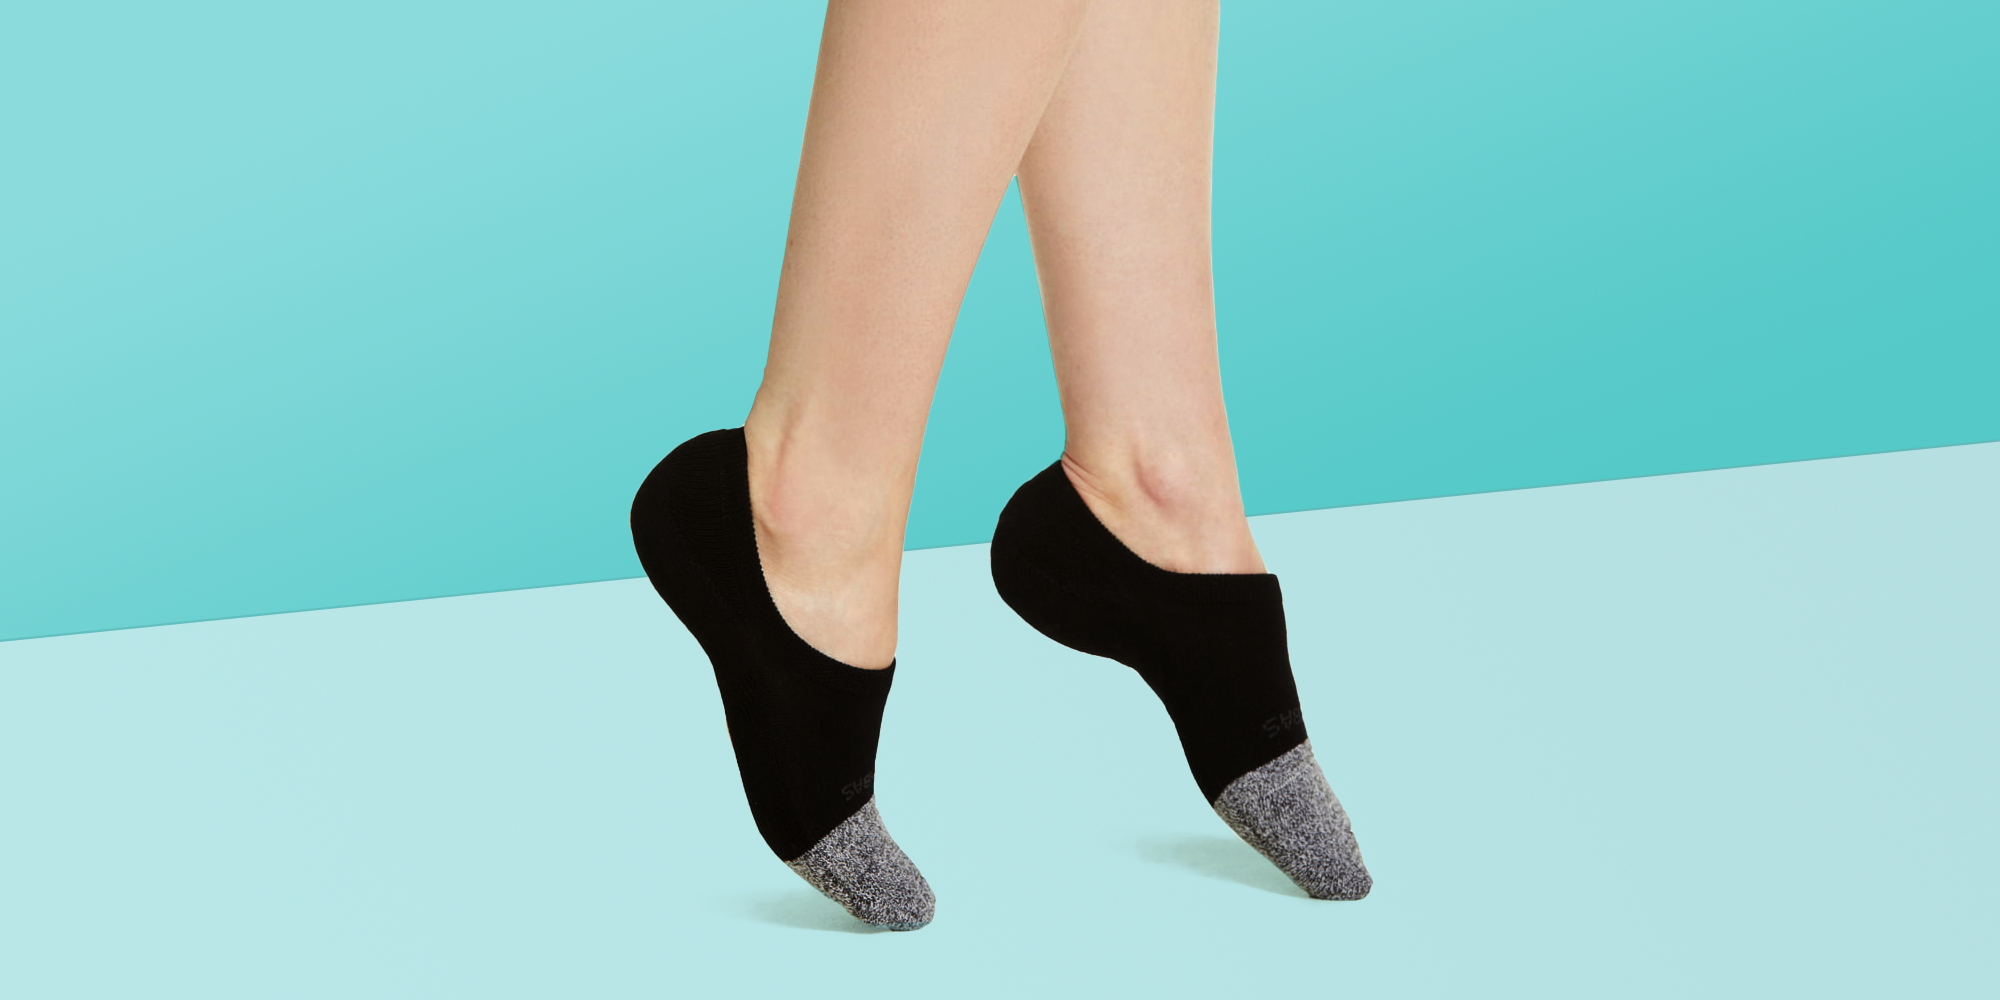 Women No Show Socks Cotton Liner Casual Socks Low Cut Girl Socks 10 Pairs Black